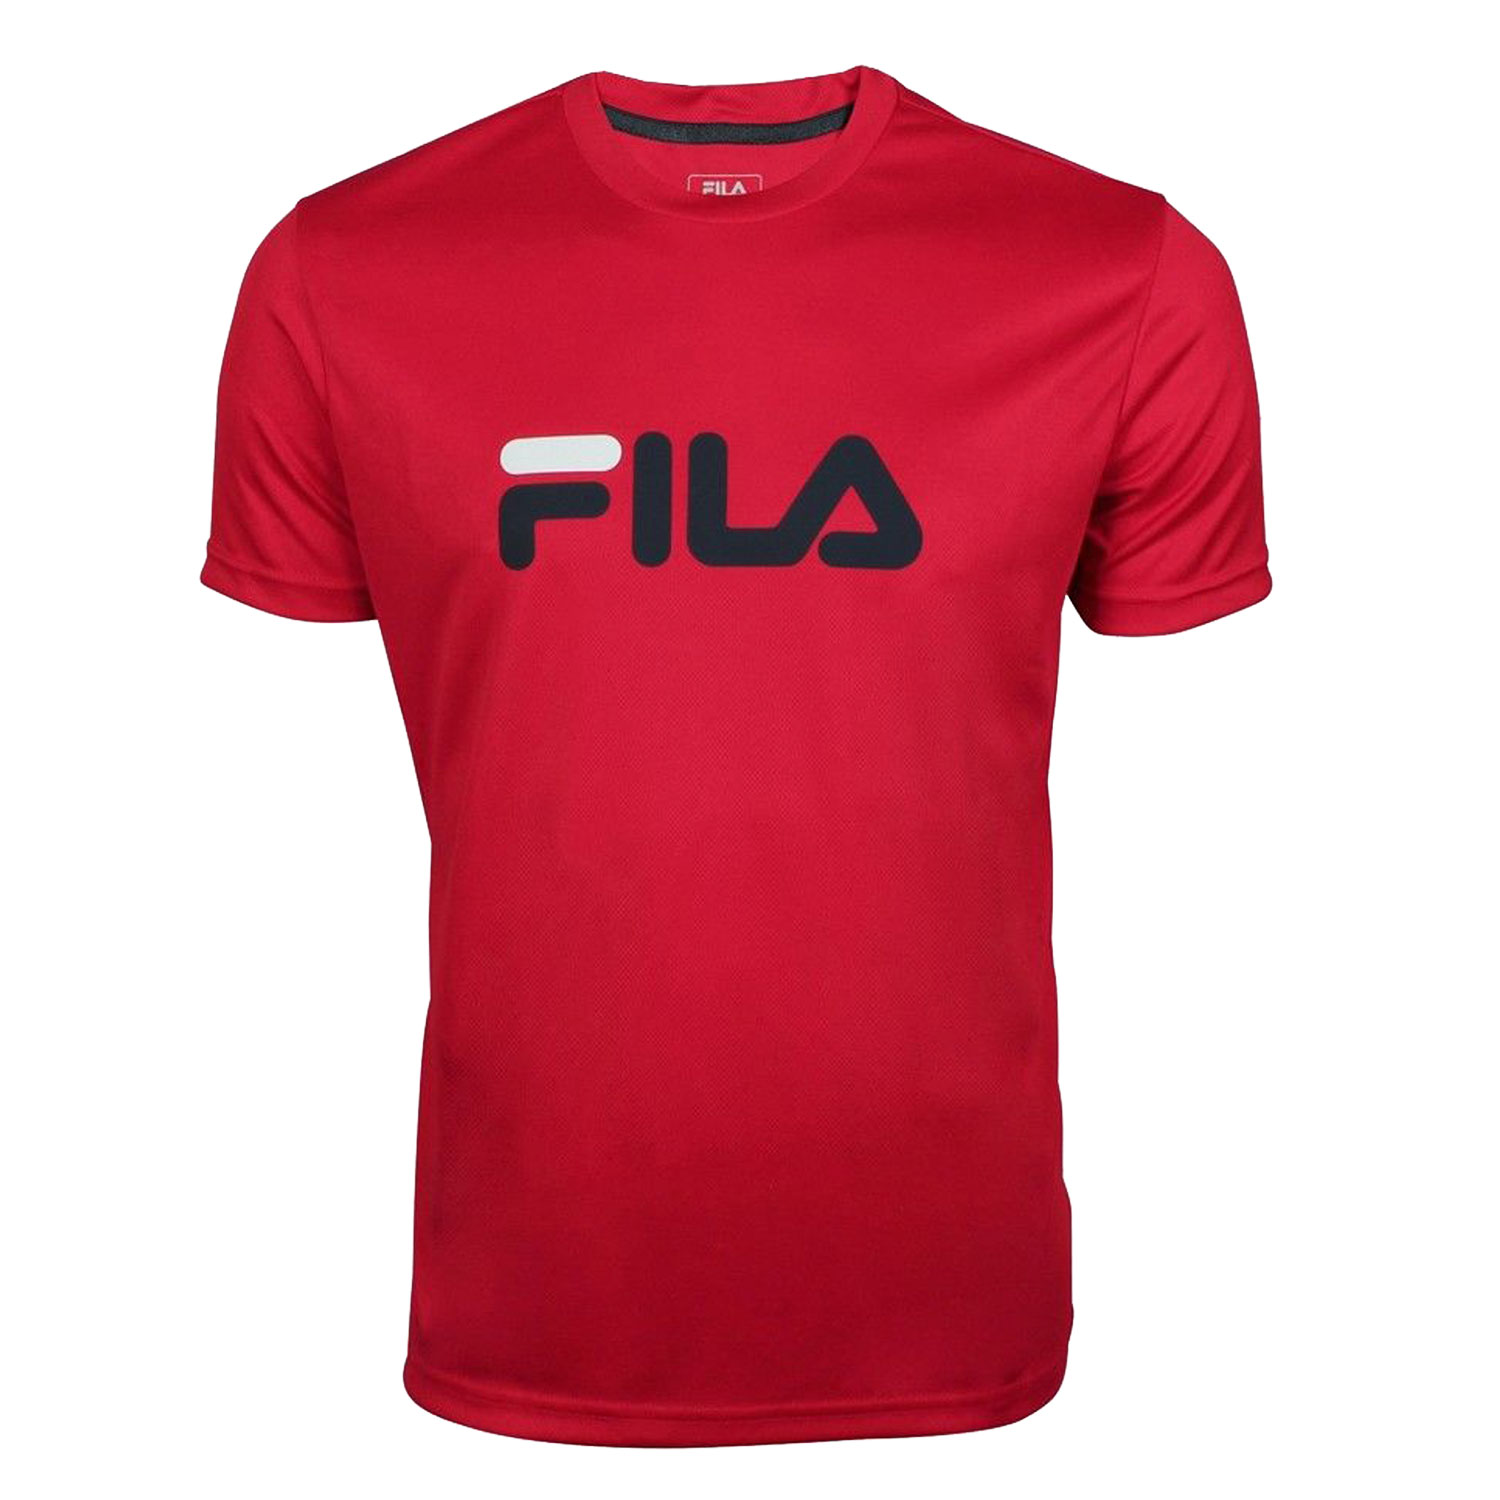 Fila Logo T-Shirt Boys - Fila Red